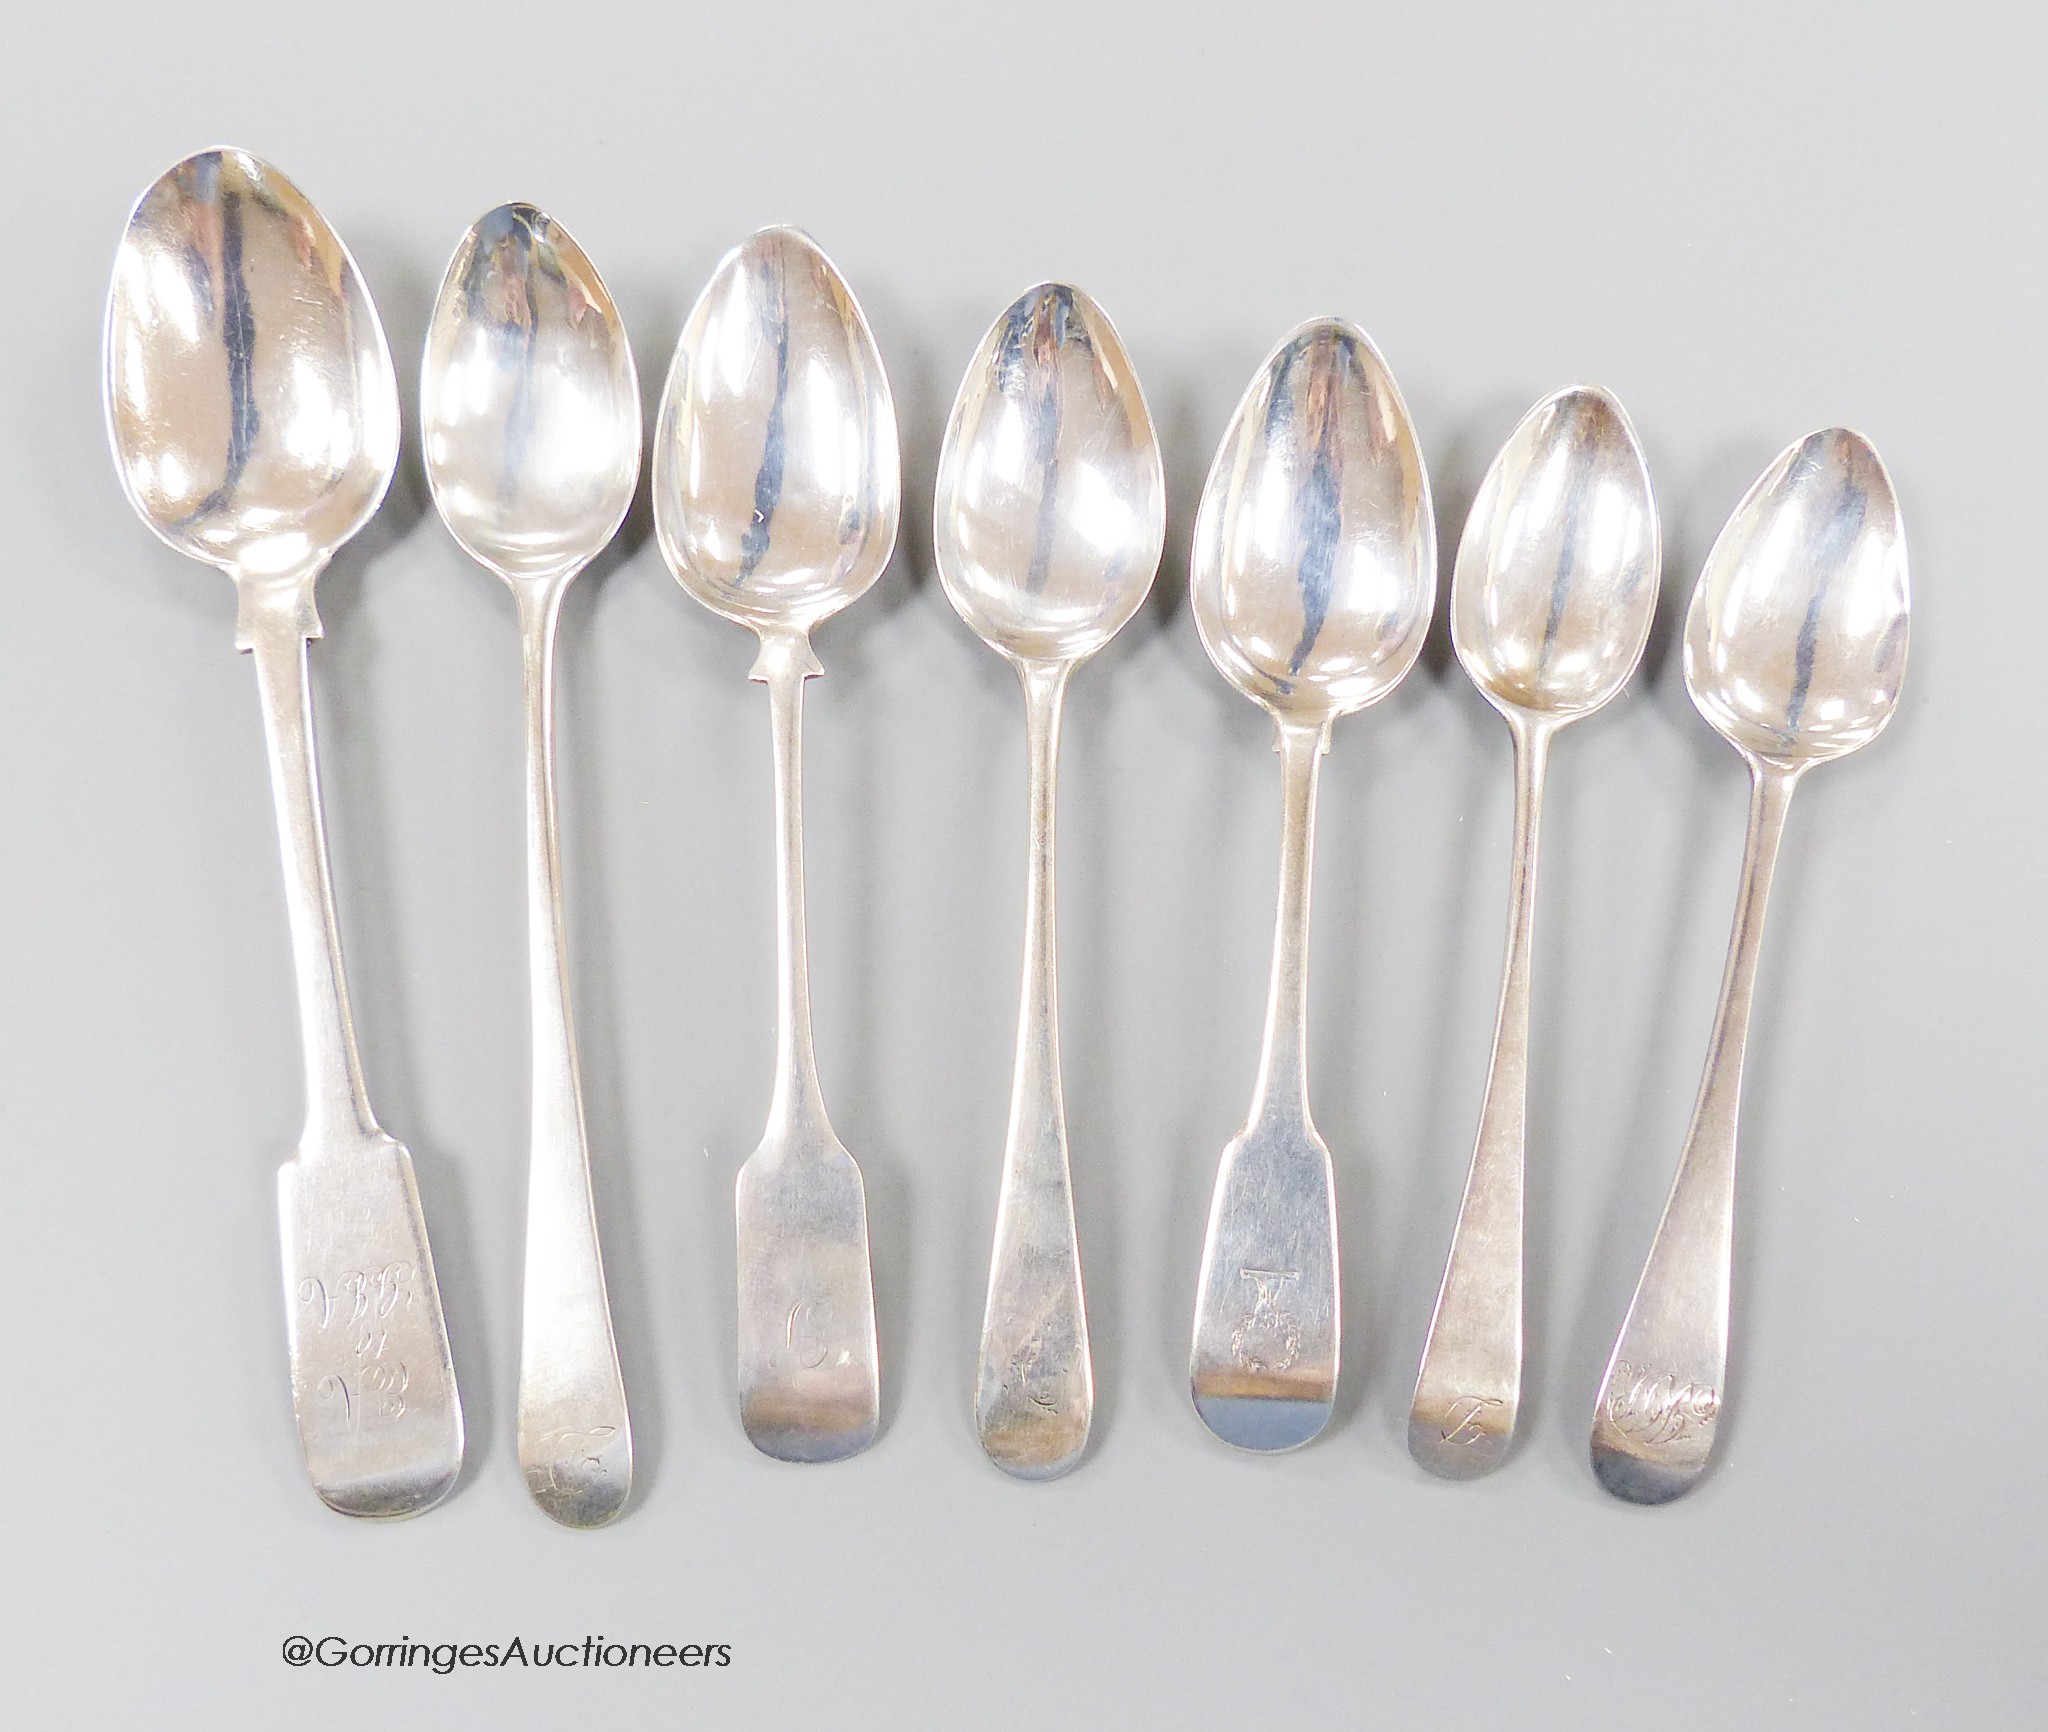 Seven assorted 18th & 19th century Scottish provincial silver Aberdeen teaspoons, (James Erskine(2), James Gordon(2), James Begg?, ?F and William Whitecross), longest 15.9cm, 109 grams.